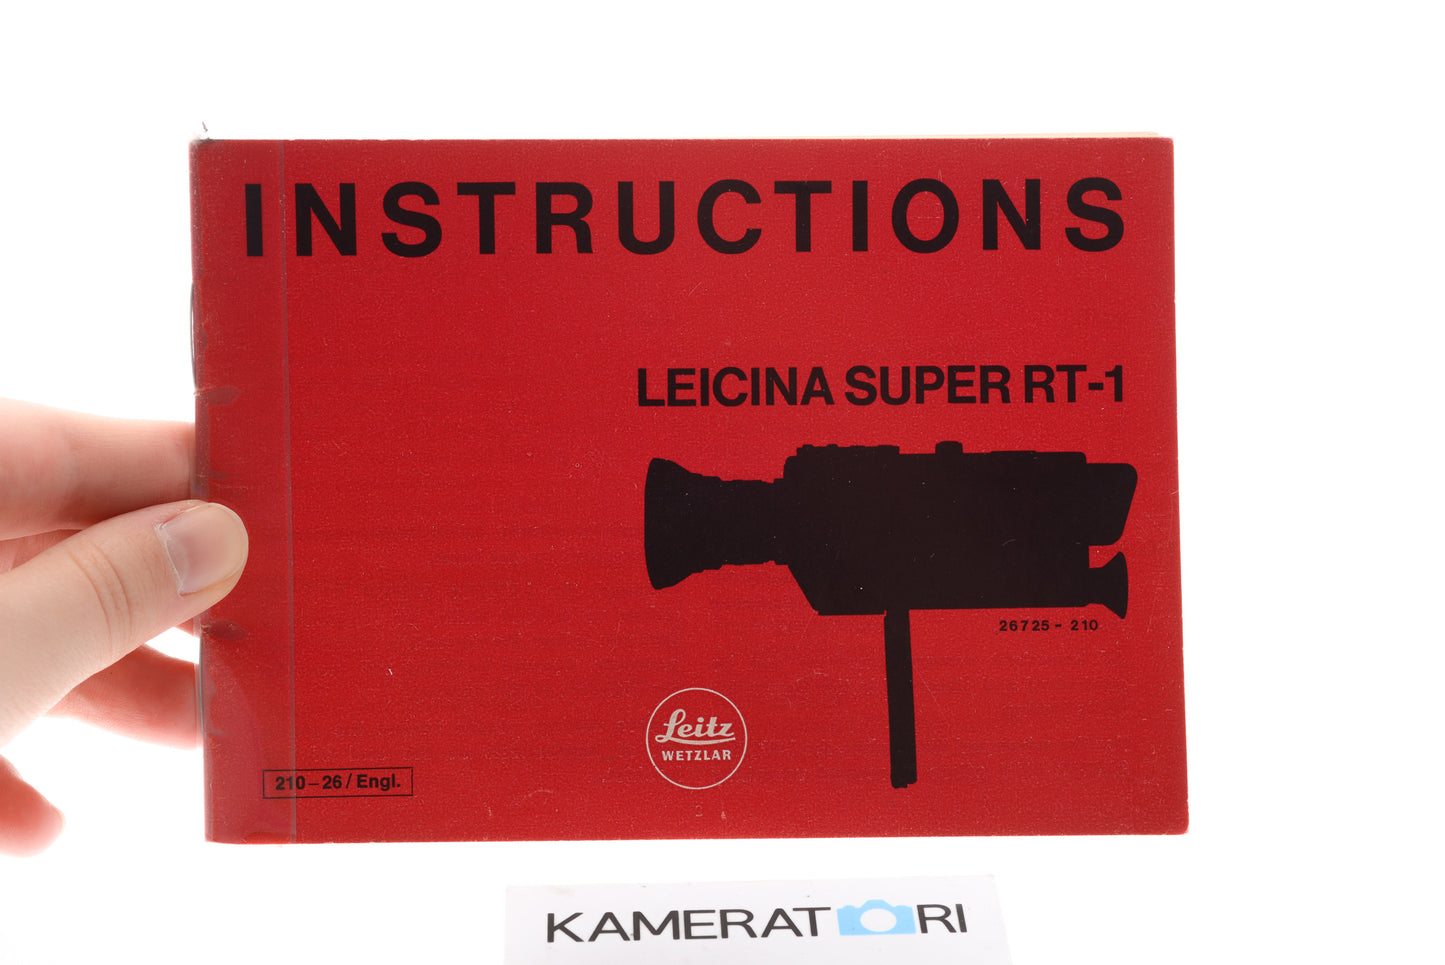 Leica Leicina Super RT-1 Instructions